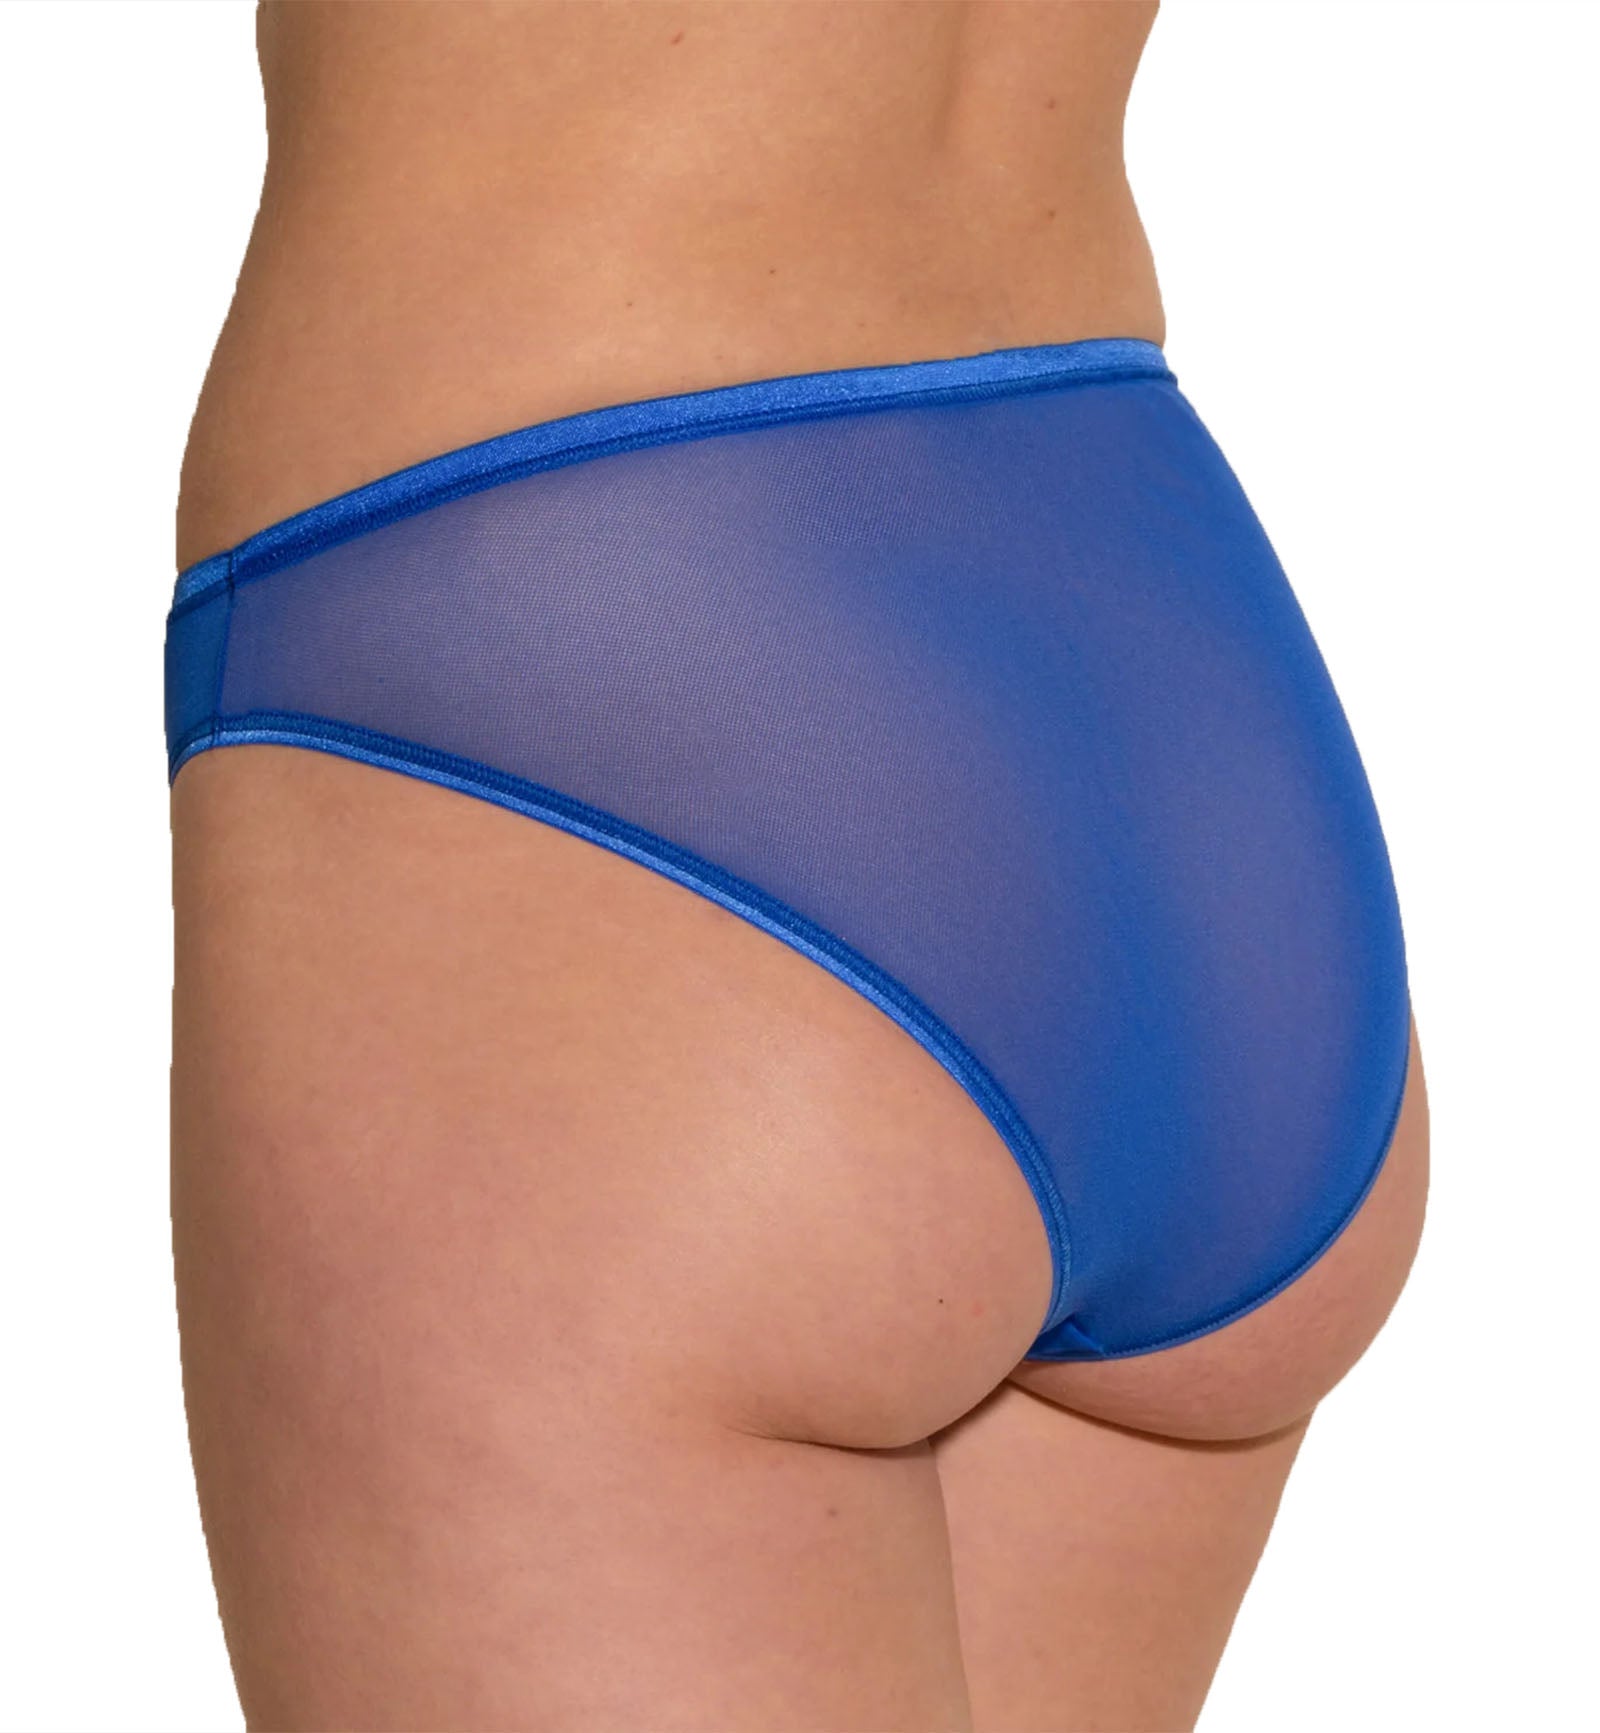 Cosabella Soire Confidence High Waist Bikini Panty (SOIRC0561),Small,Cobalt - Cobalt,Small